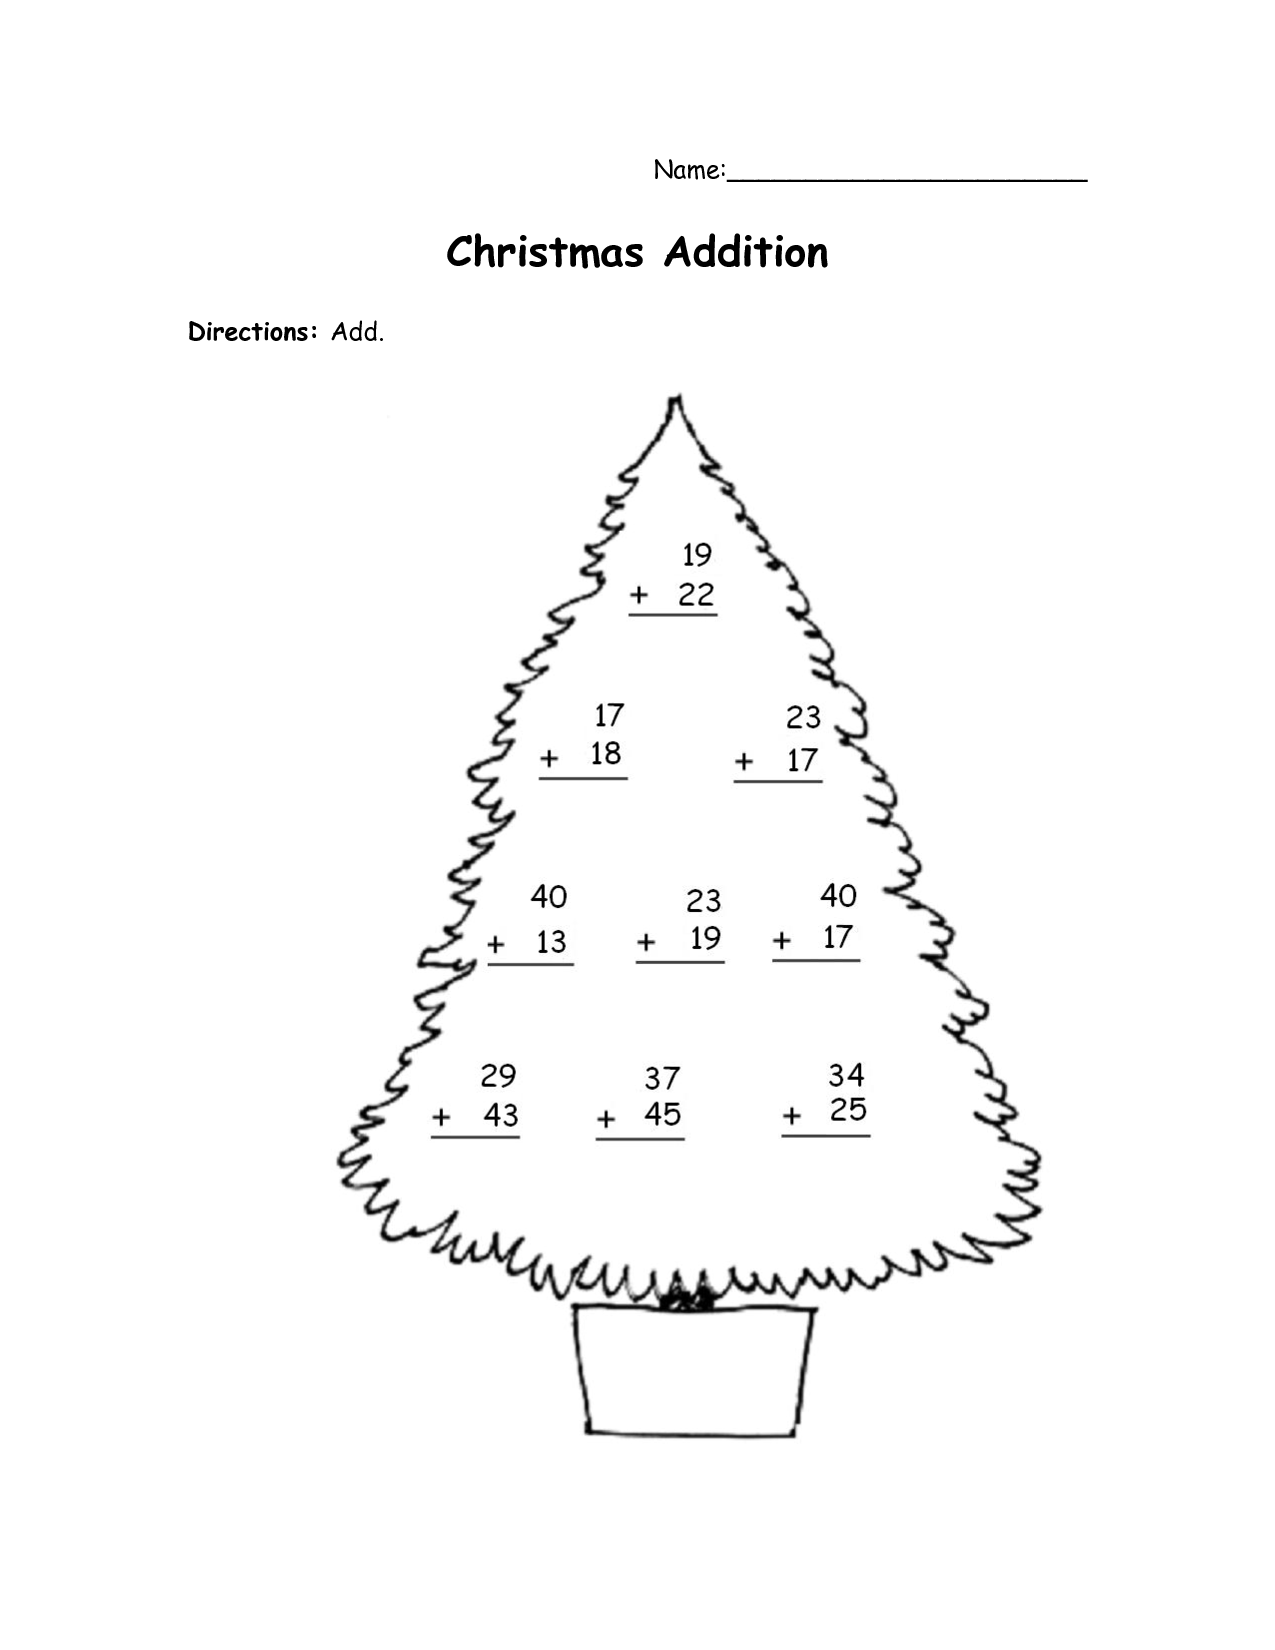 Christmas Tree Addition Worksheet